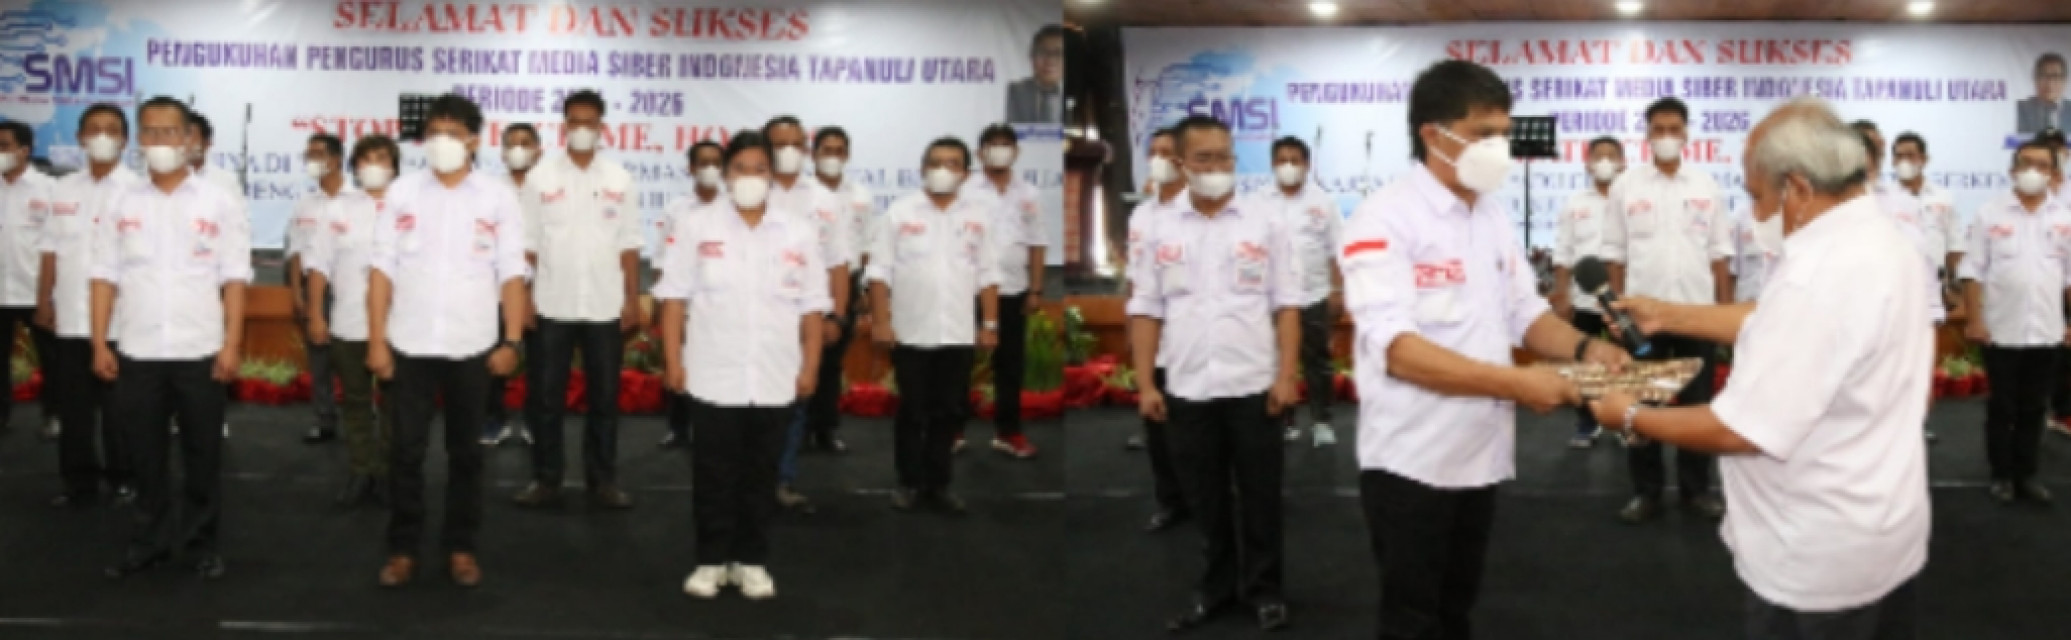 Pengurus Media Siber Indonesia (SMSI) Taput Resmi Dilantik